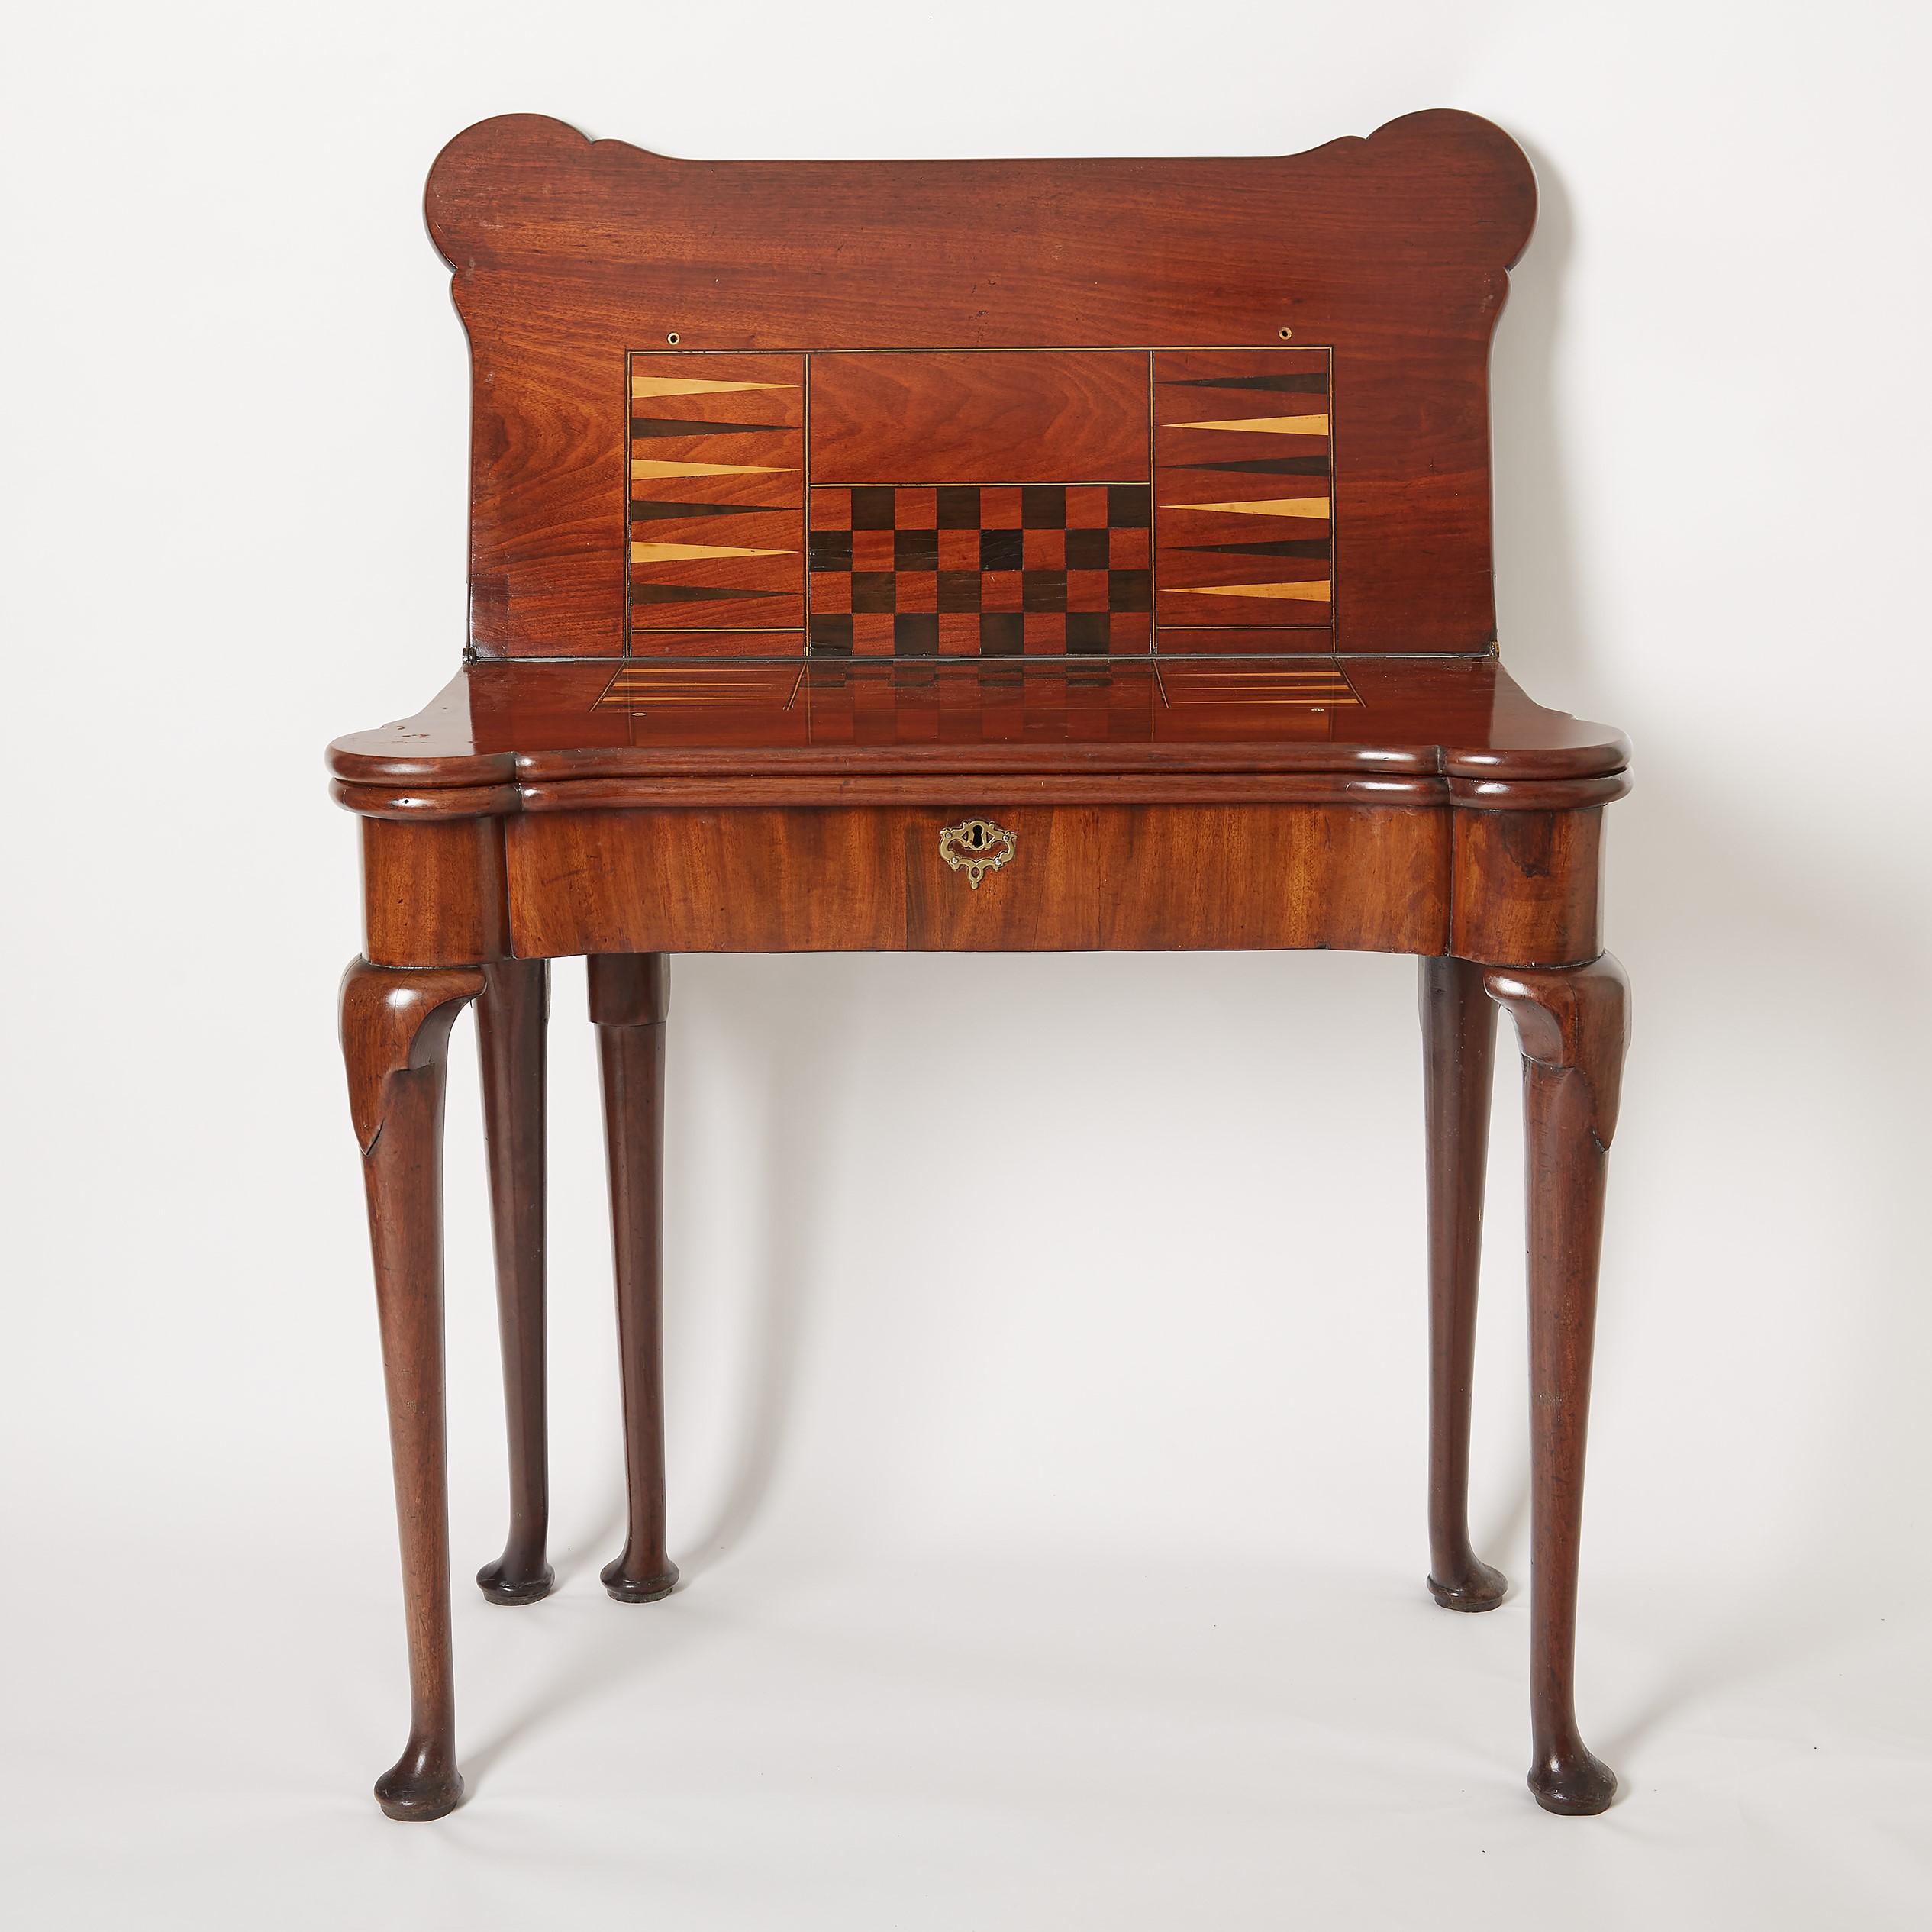 18th century Georgian mahogany triple top games table with ebony and satinwood inlay. Circa 1740.